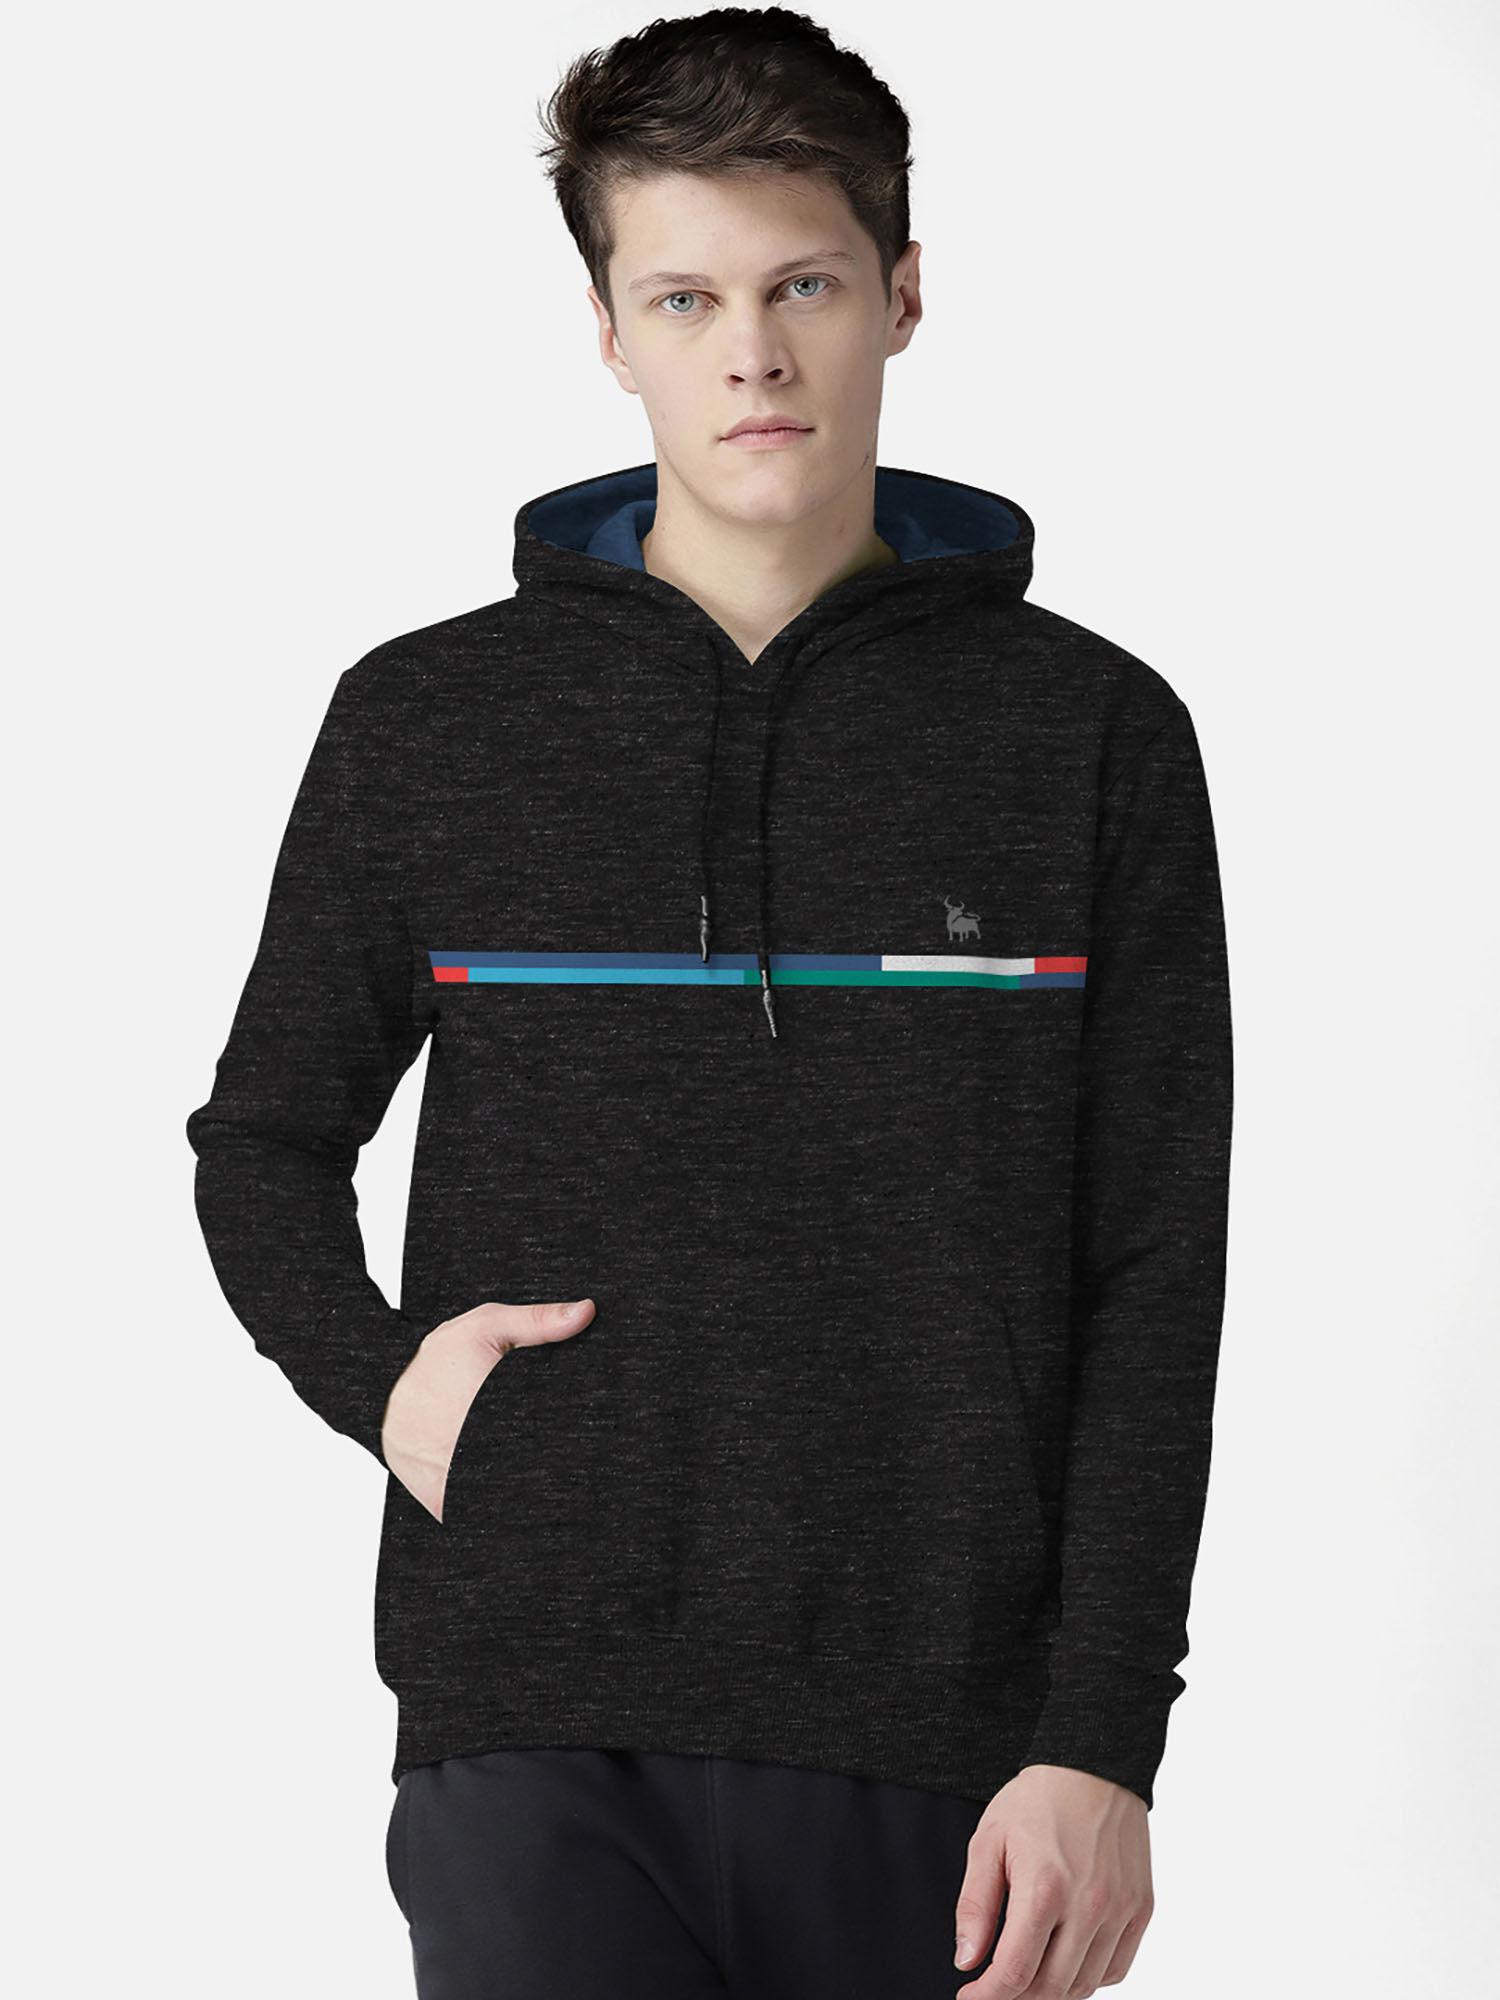 black-designer-men-full-sleeve-hooded-sweatshirt-with-kangaroo-pocket